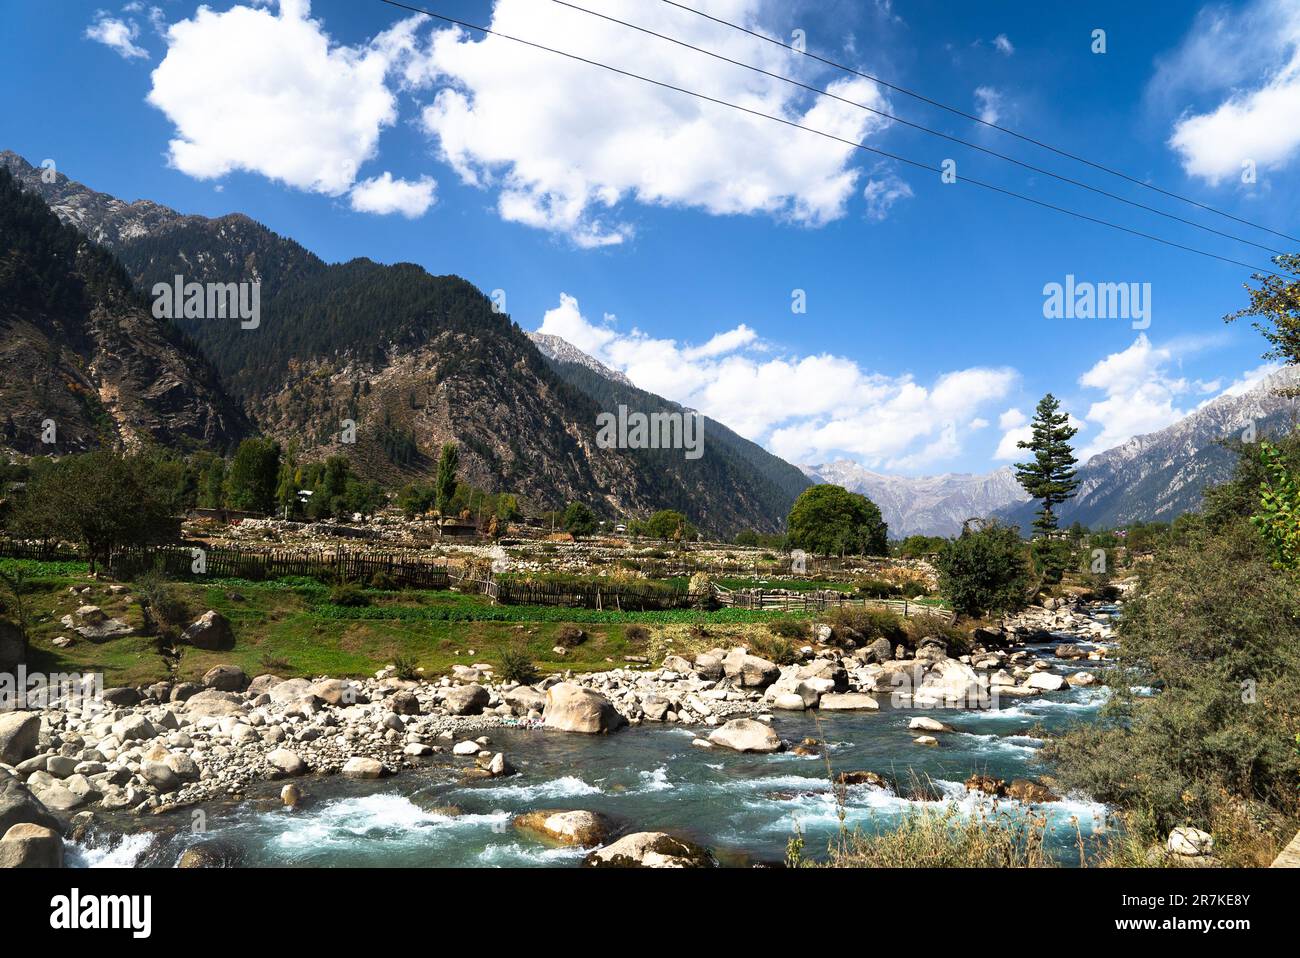 Kumrat Valley, The Panjkora River, Which Originates in the Hindu Kush Mountains, Runs Through Kumrat Valley, Pakistan. Stock Photo